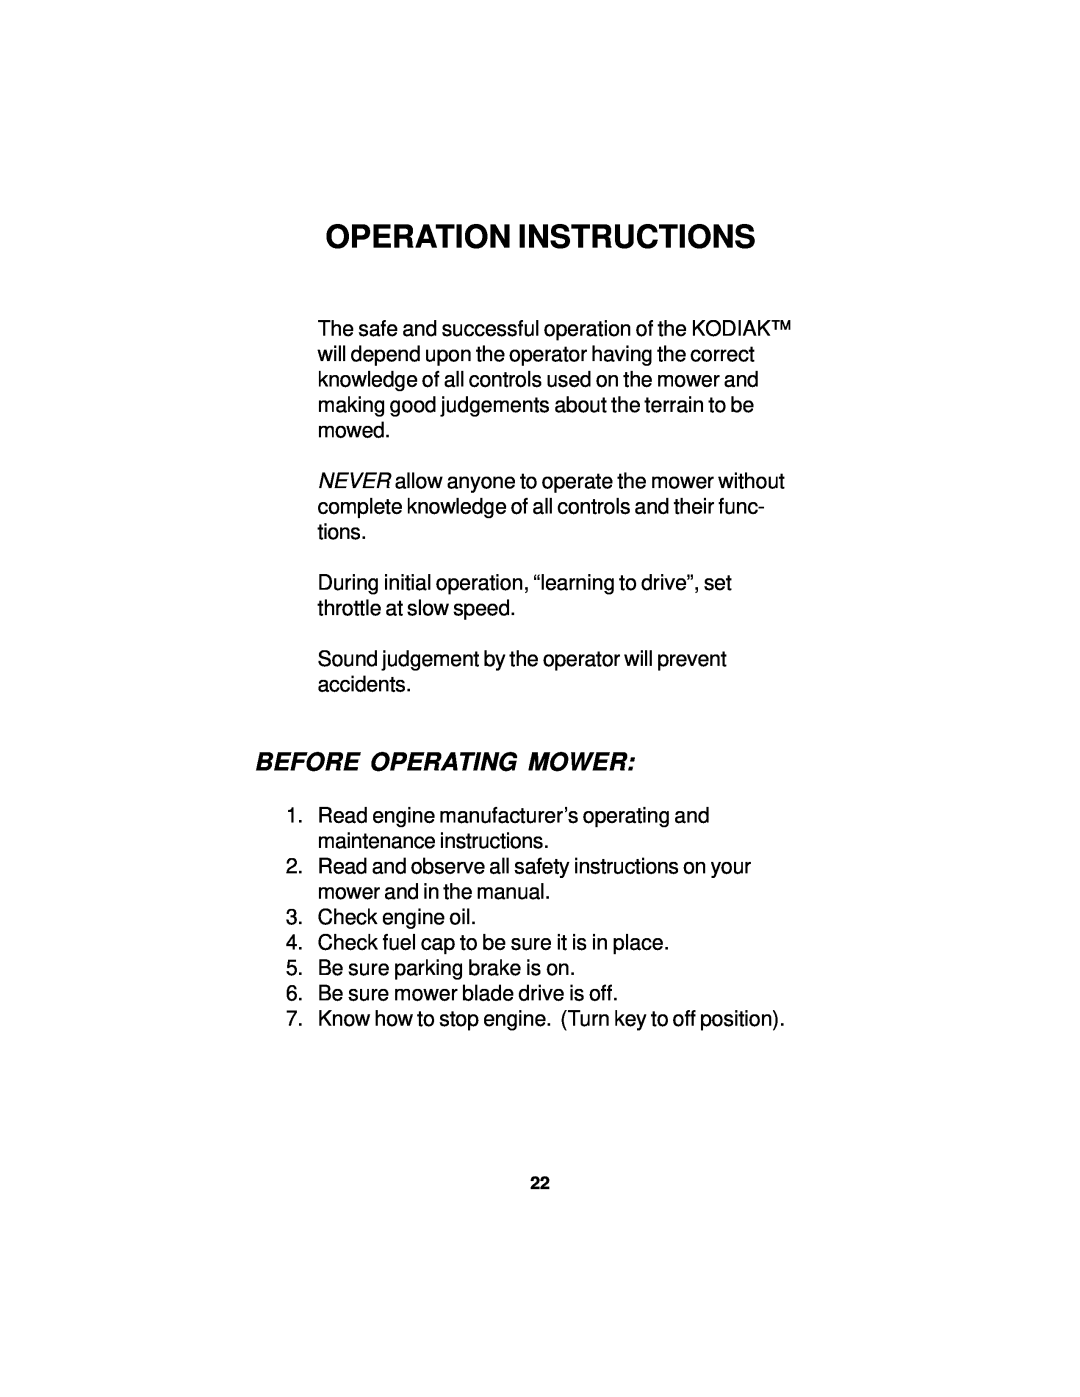 Dixon 18124-0804 manual Operation Instructions, Before Operating Mower 